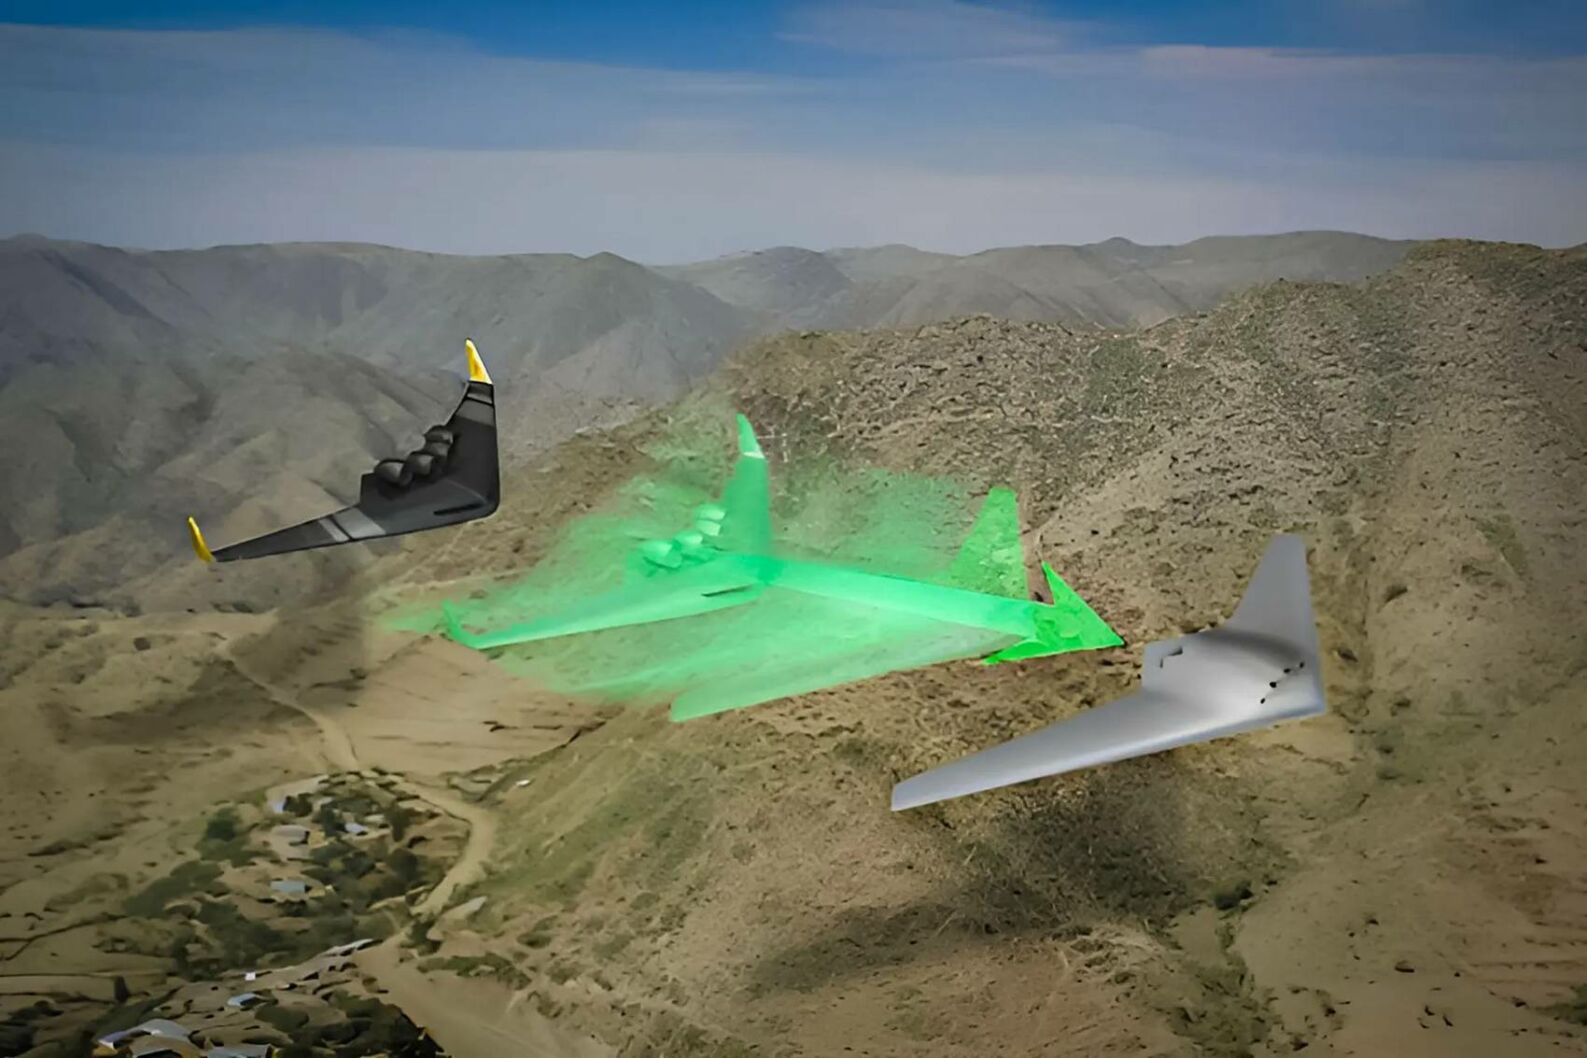 DARPA's XRQ-73 Newest X-plane